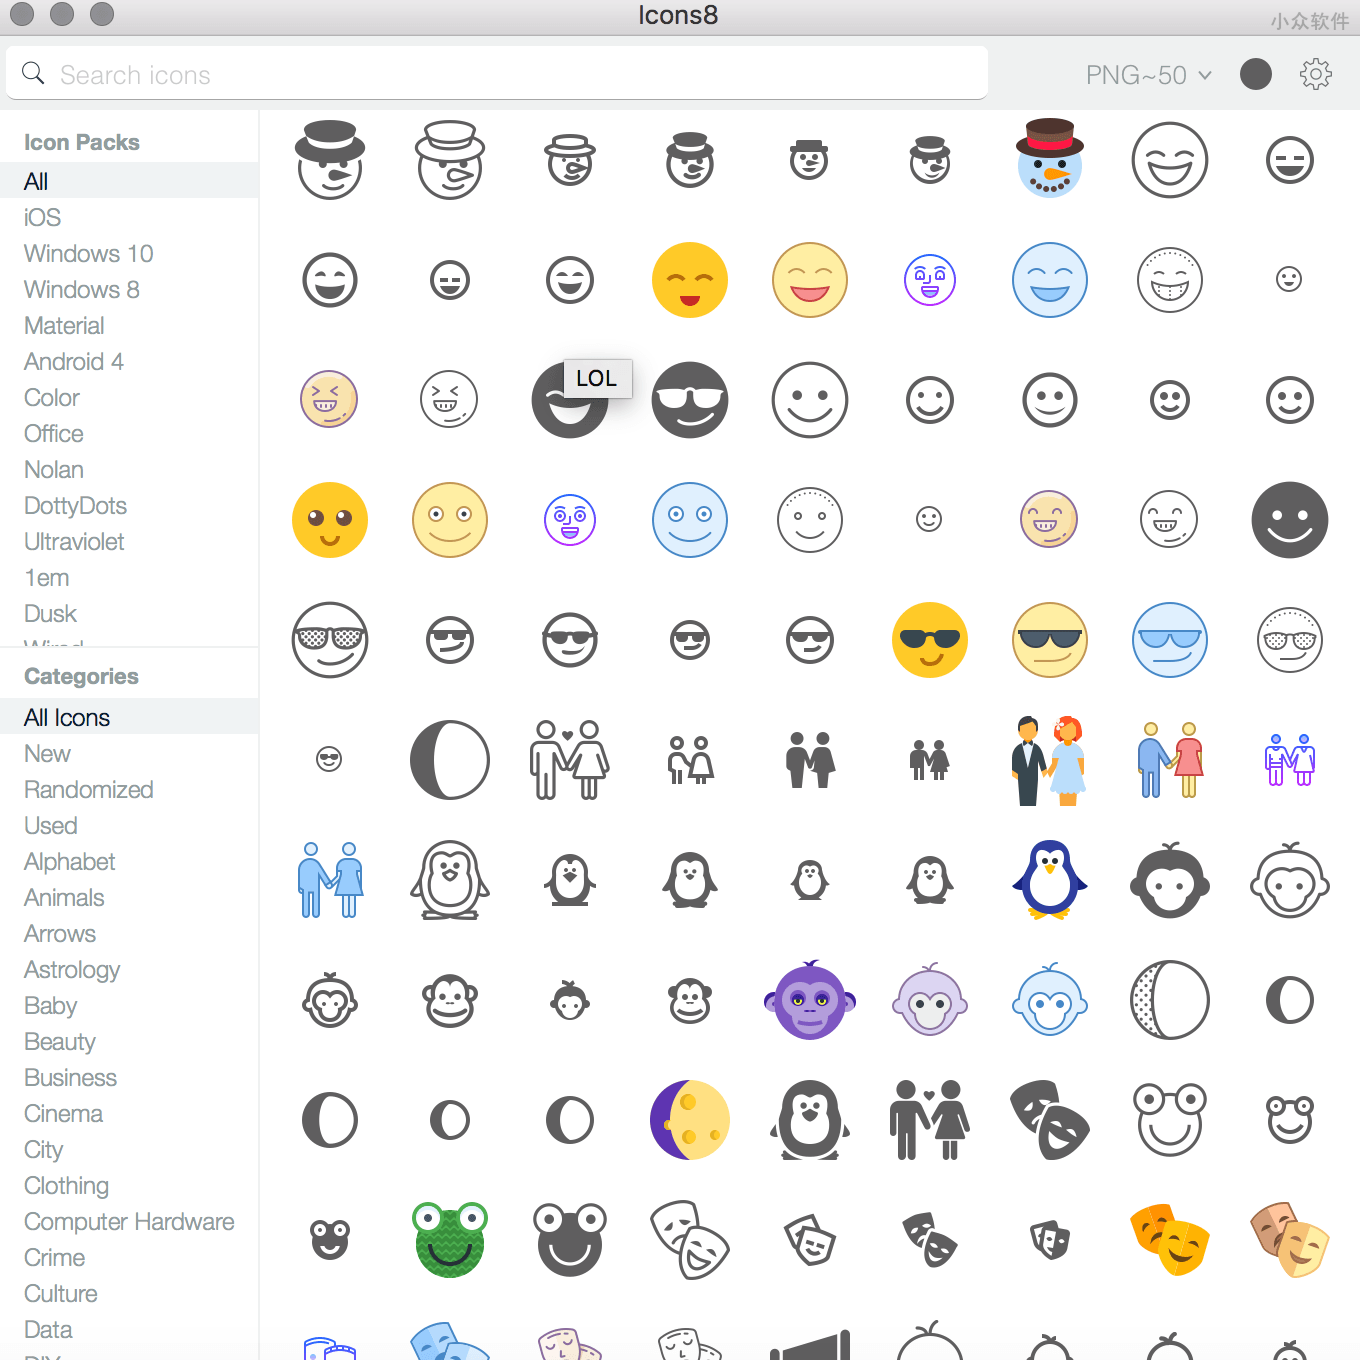 Icons8 – 高效优雅的图标库 [Web/Win/macOS]